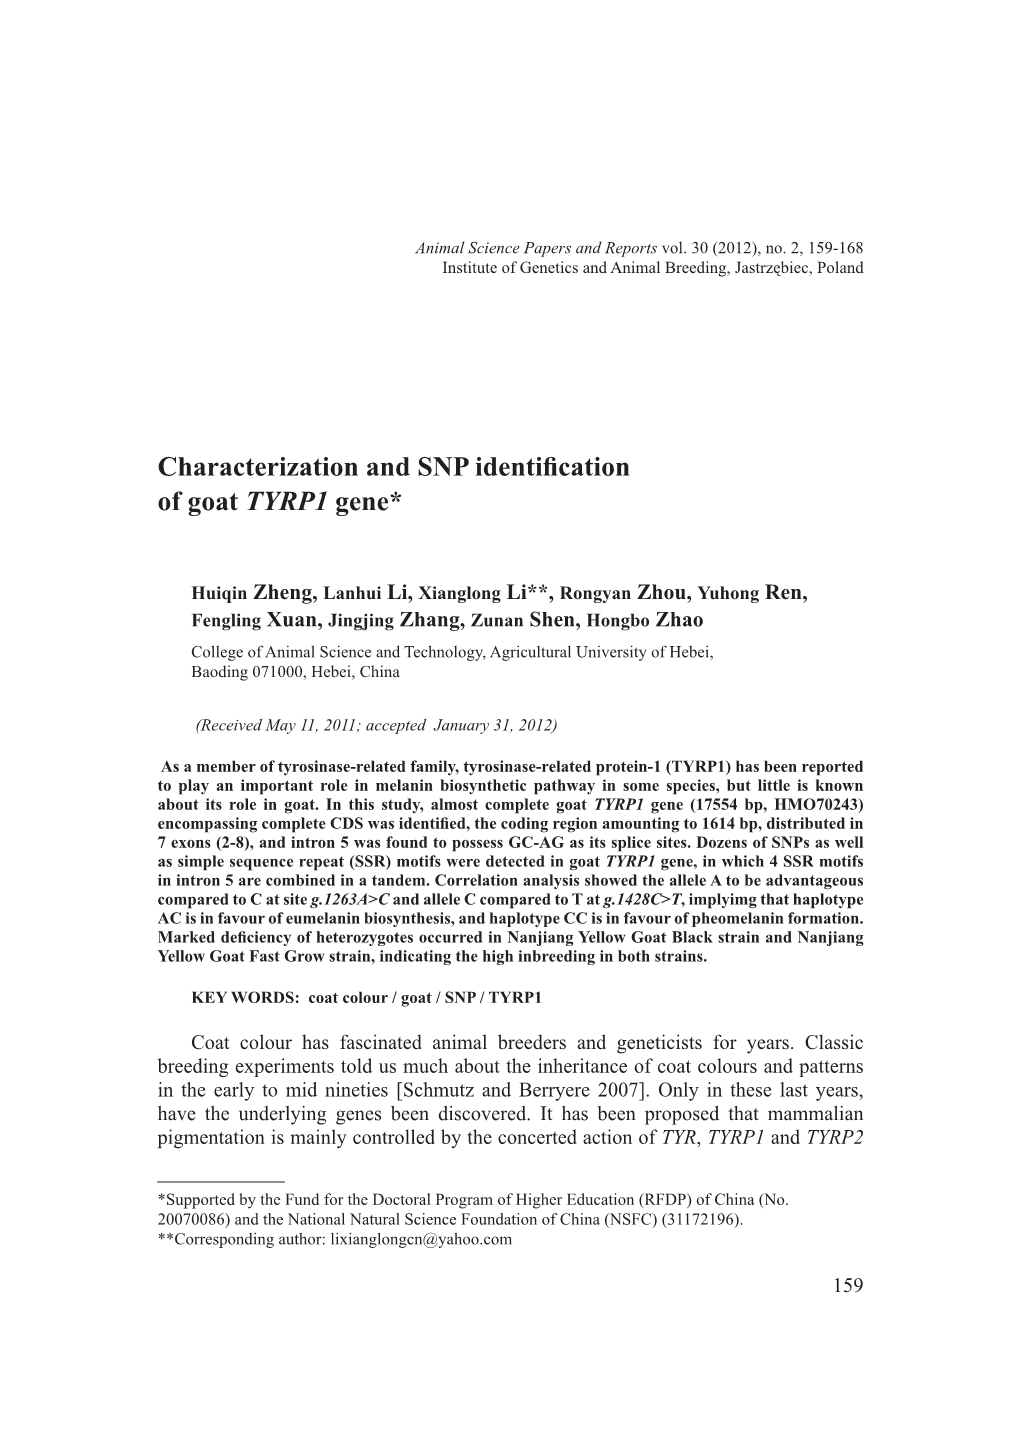 Characterization and SNP Identification of Goat TYRP1 Gene*